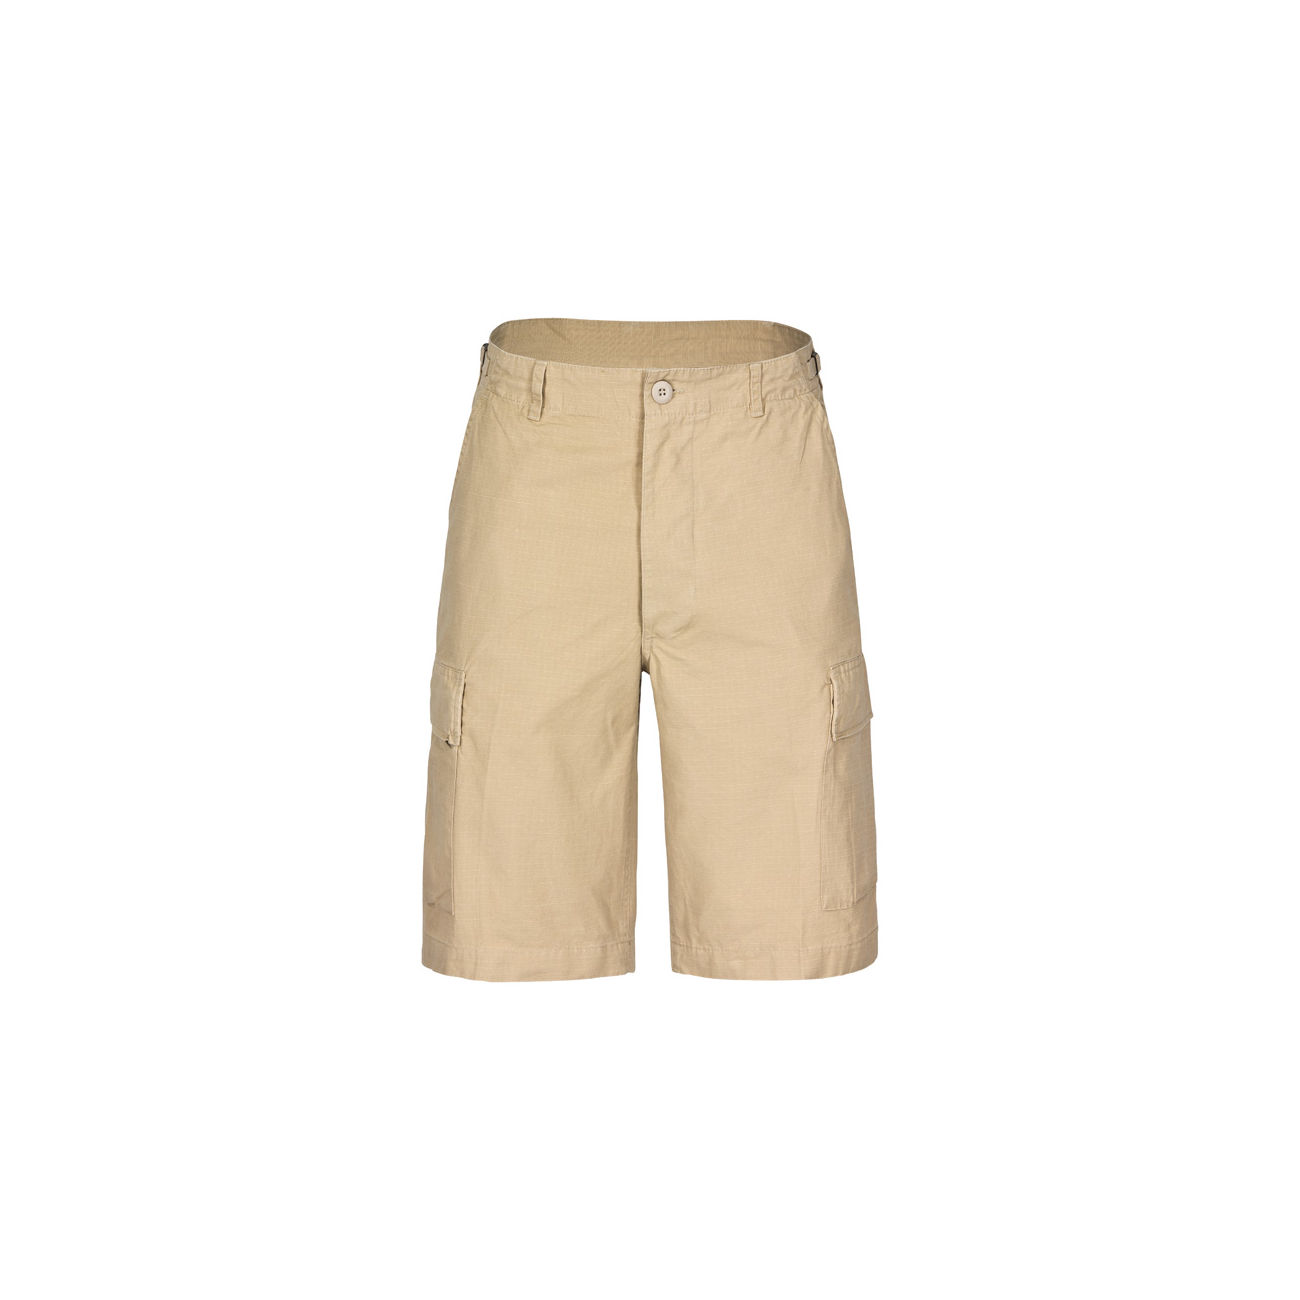 Bermuda Shorts Ripstop, khaki, Prewash,